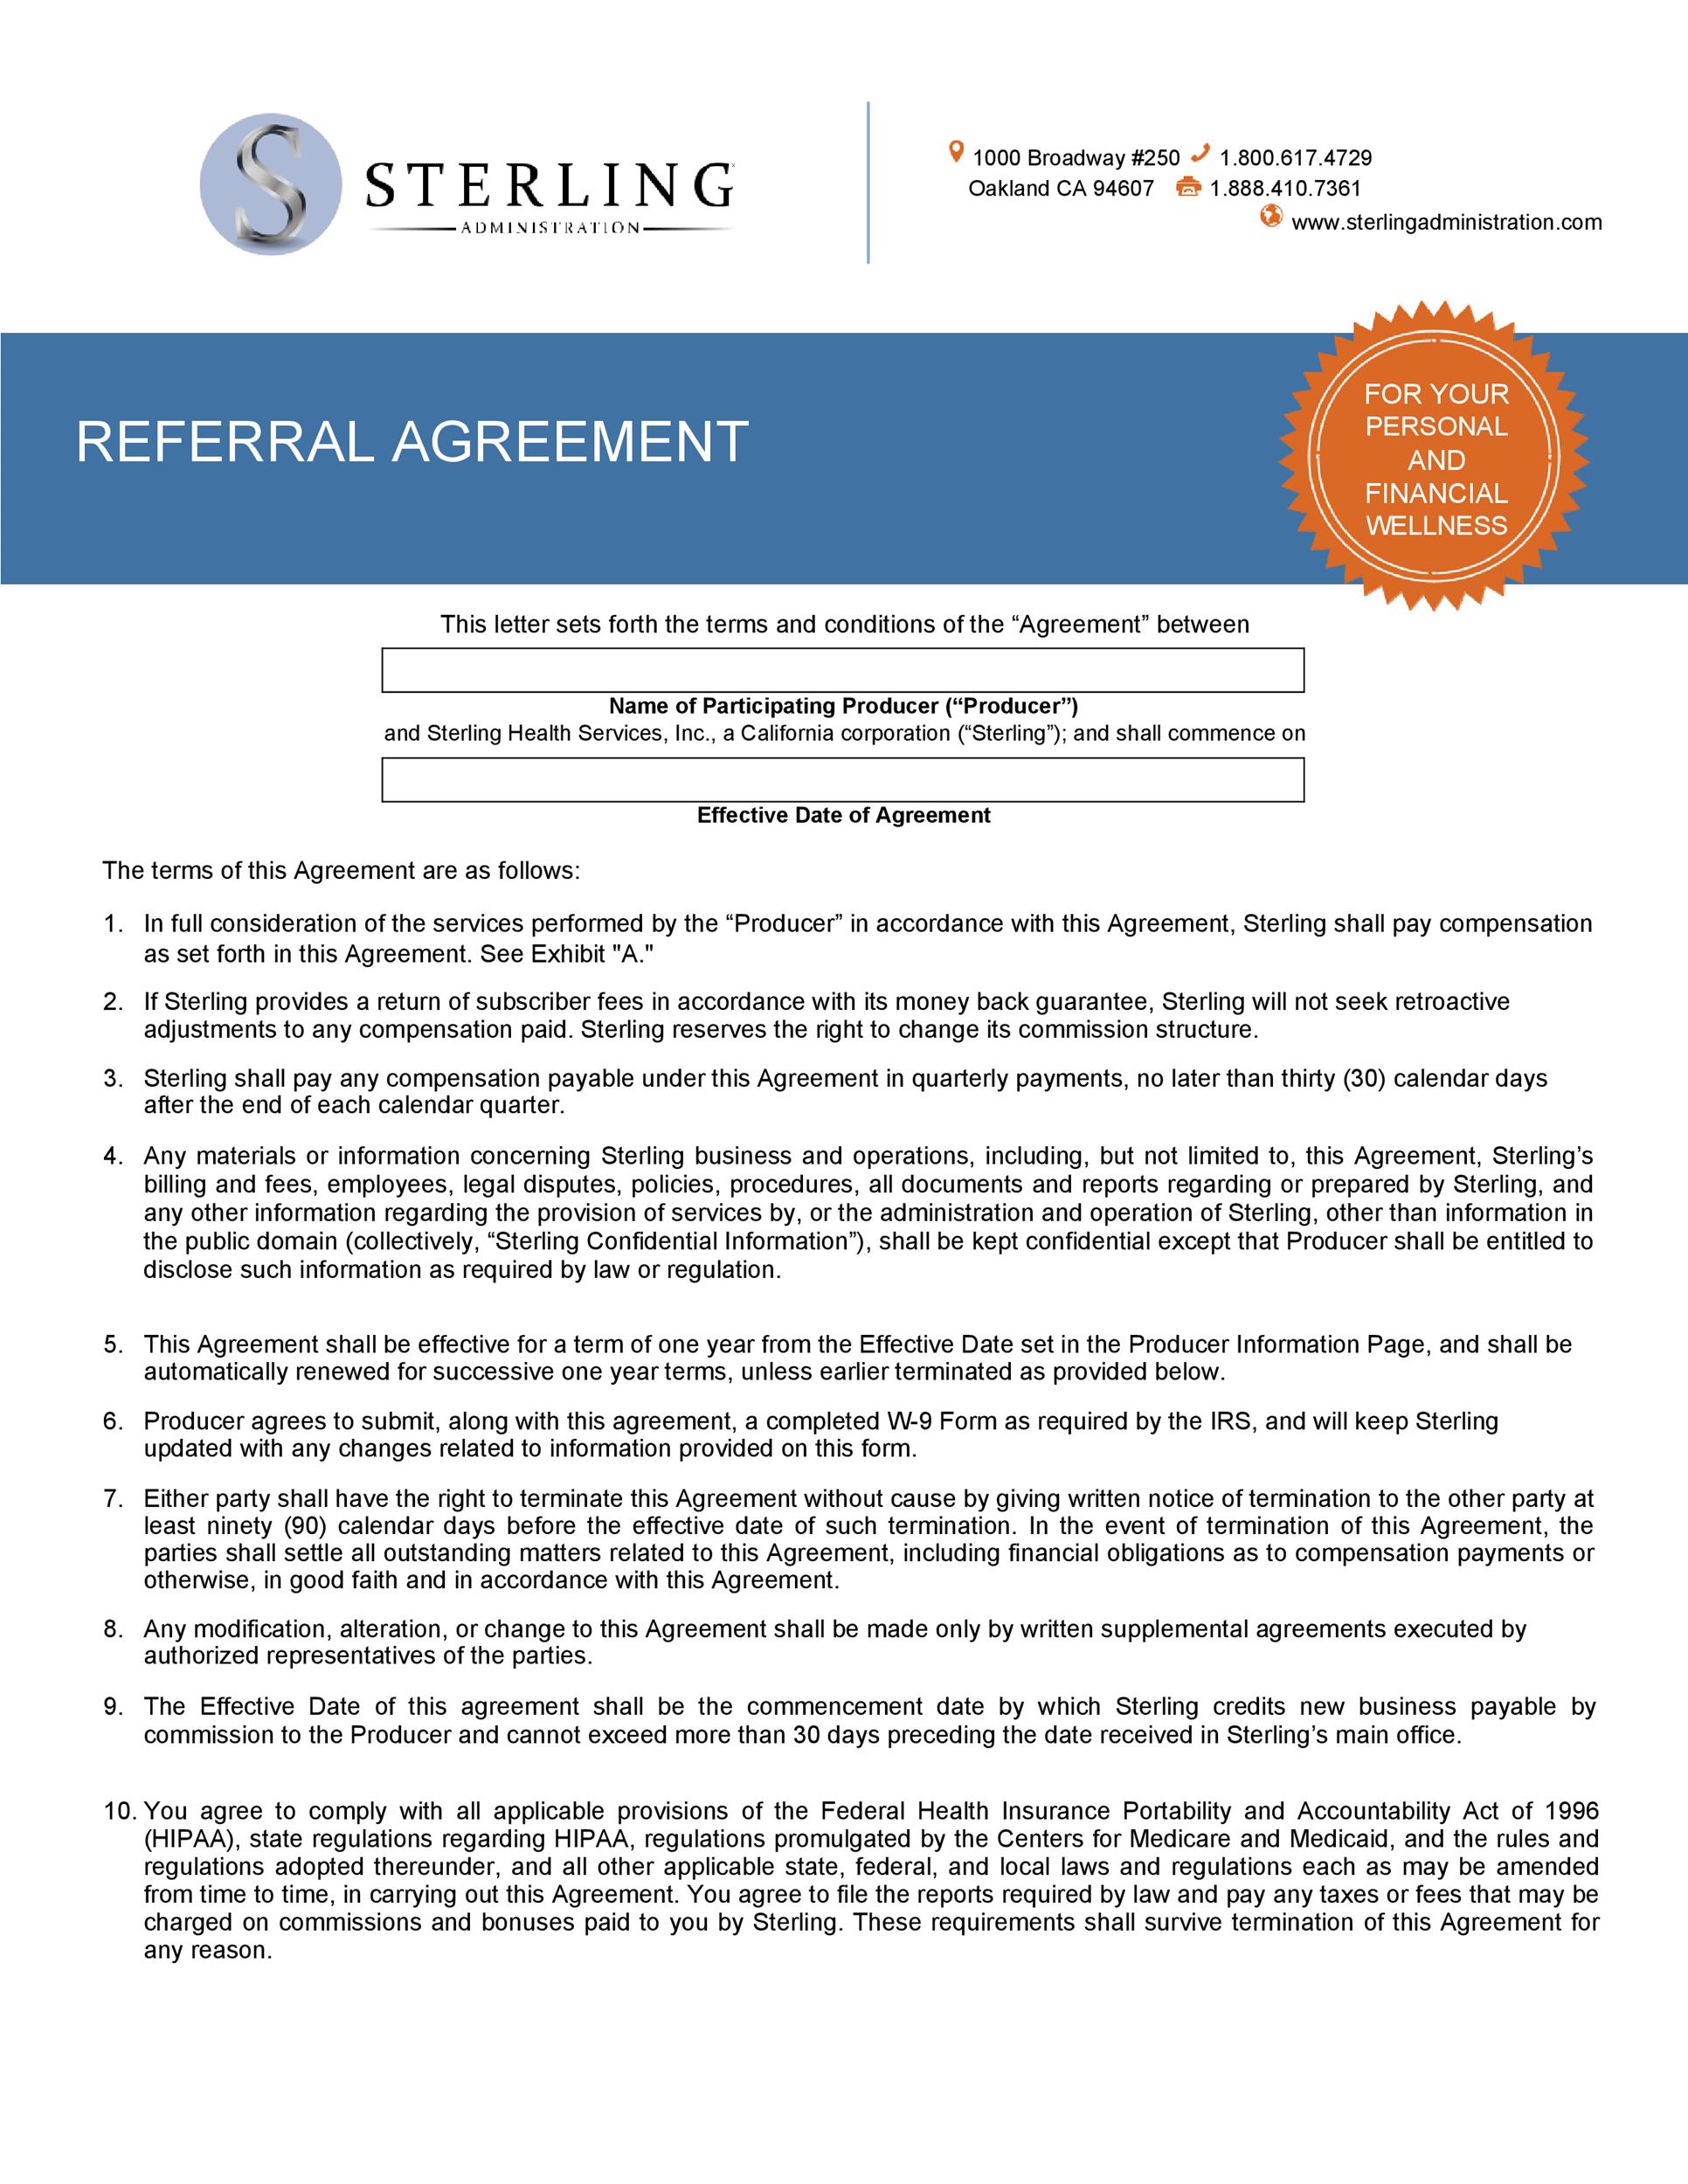 50 Best Referral Agreement Templates [100 FREE] ᐅ TemplateLab